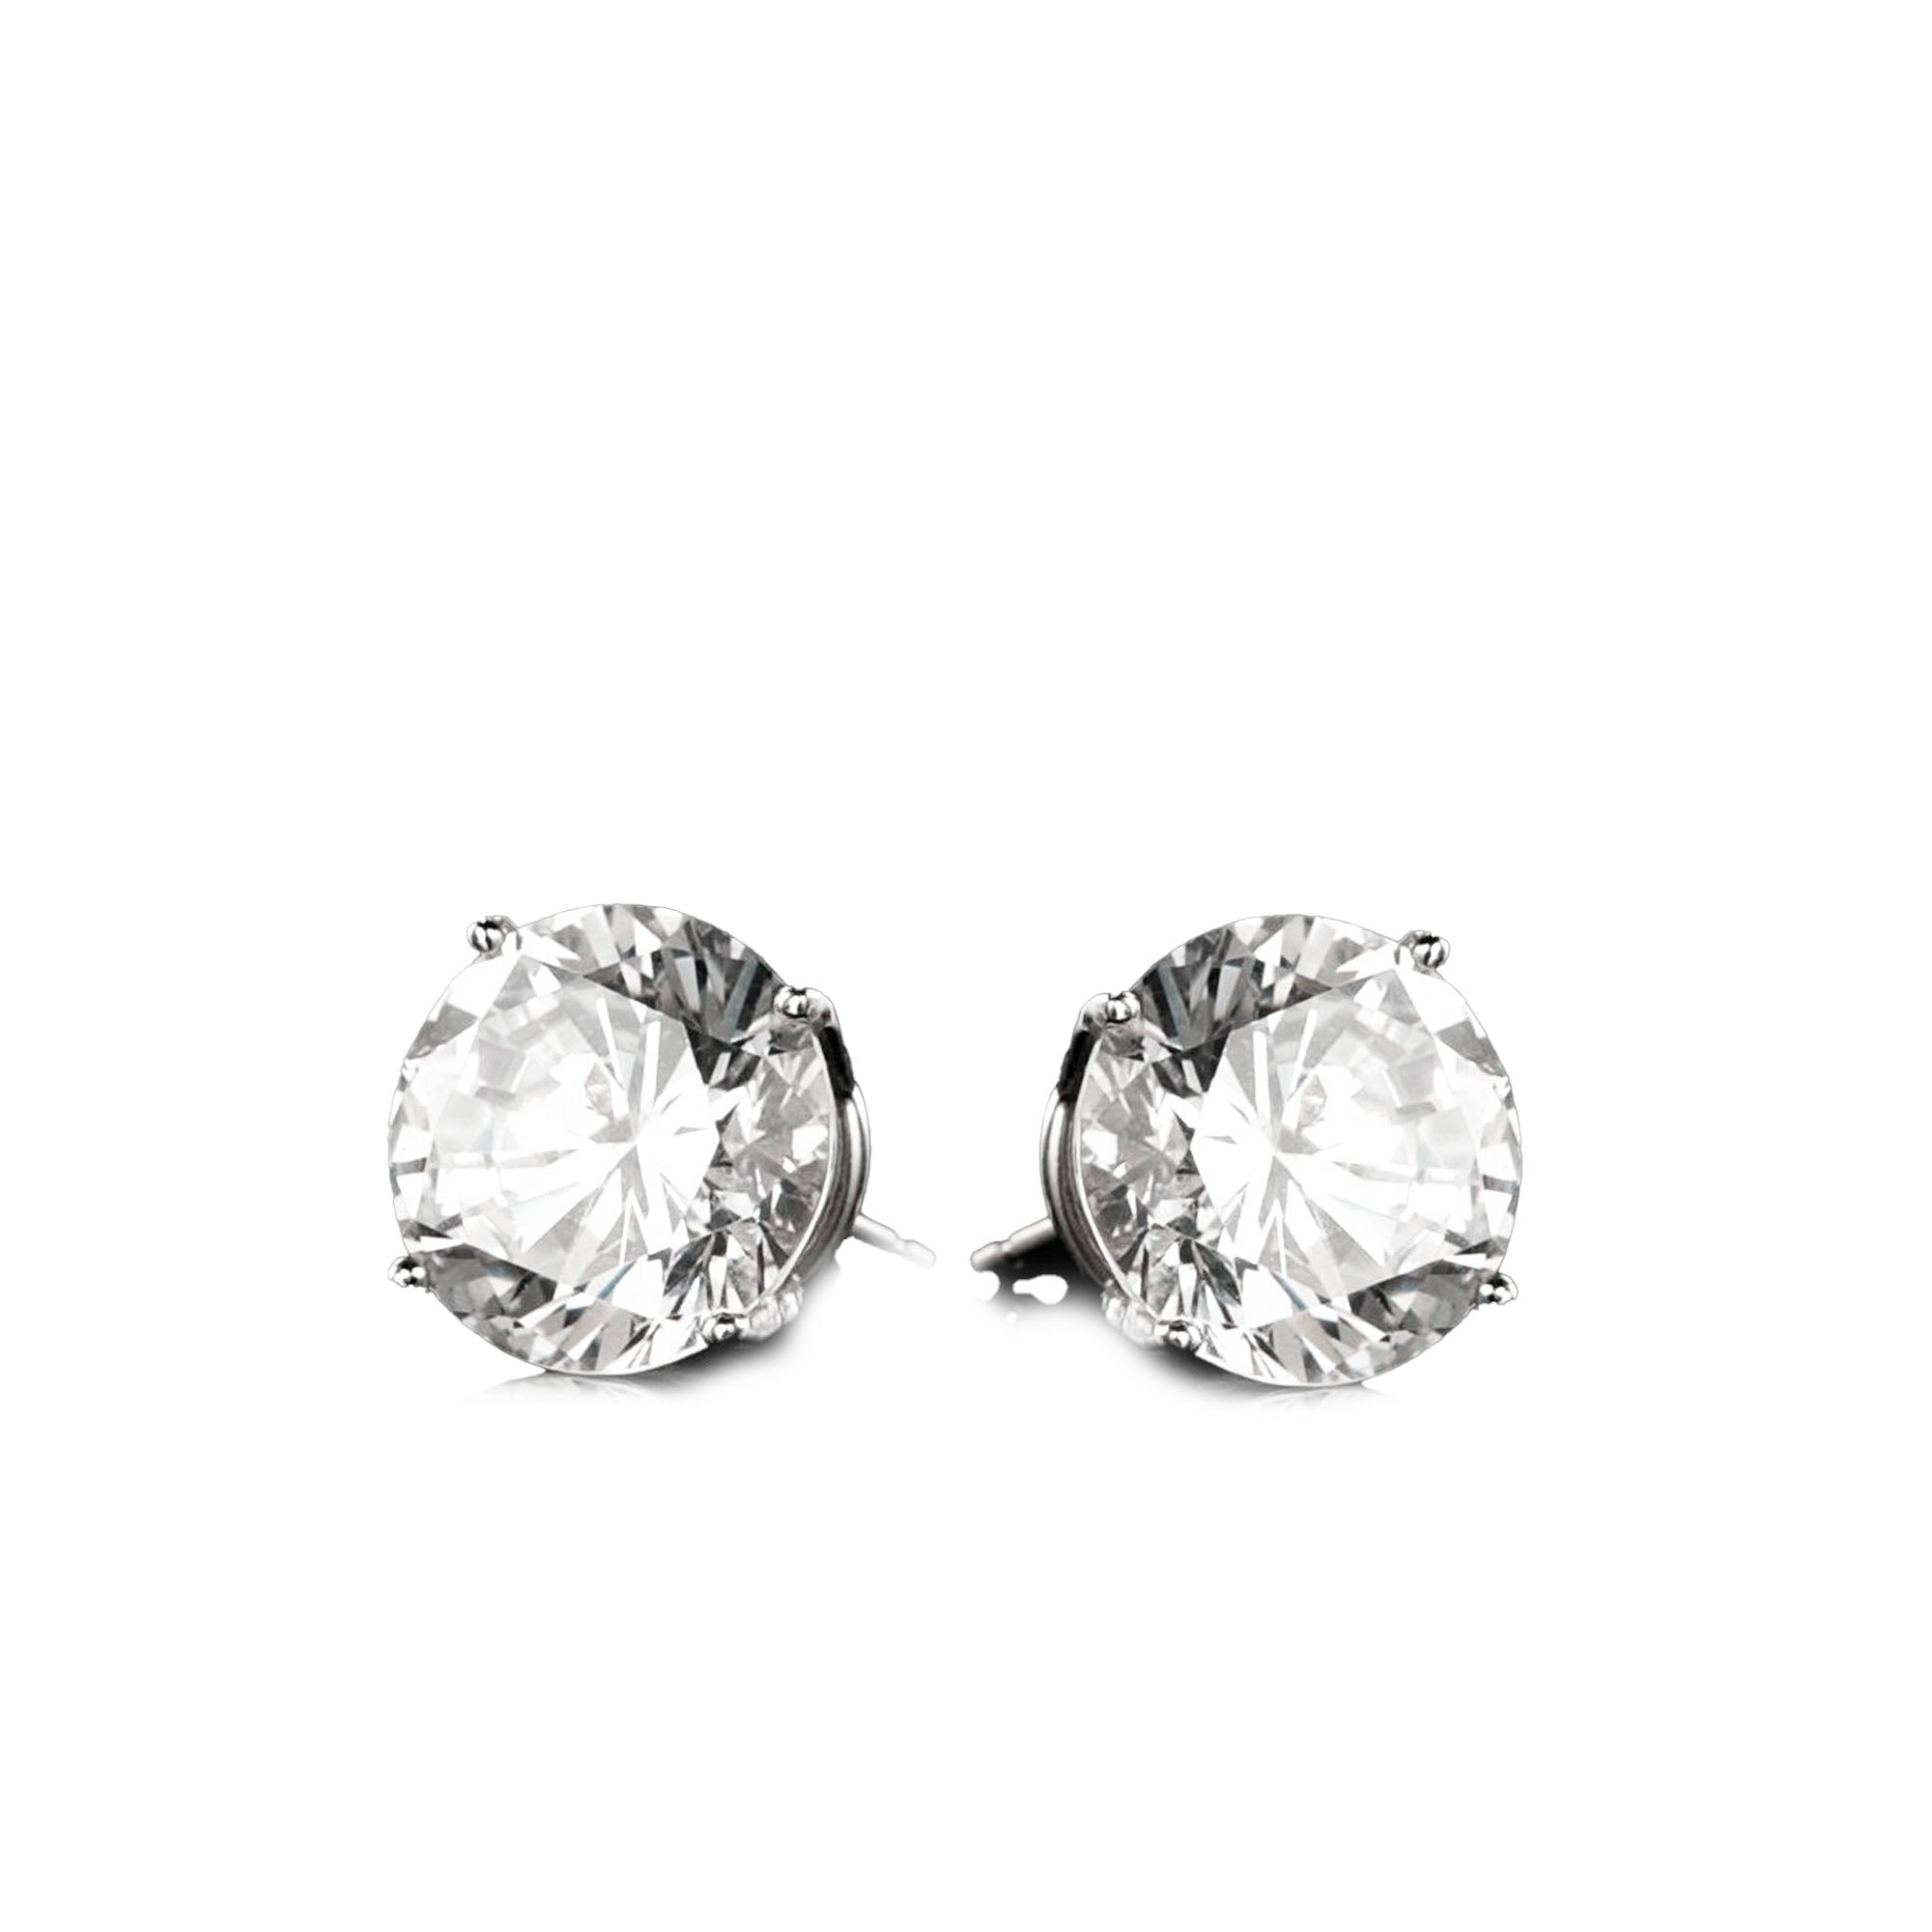 Diamond Stud Earring - Three Carats Each Ear